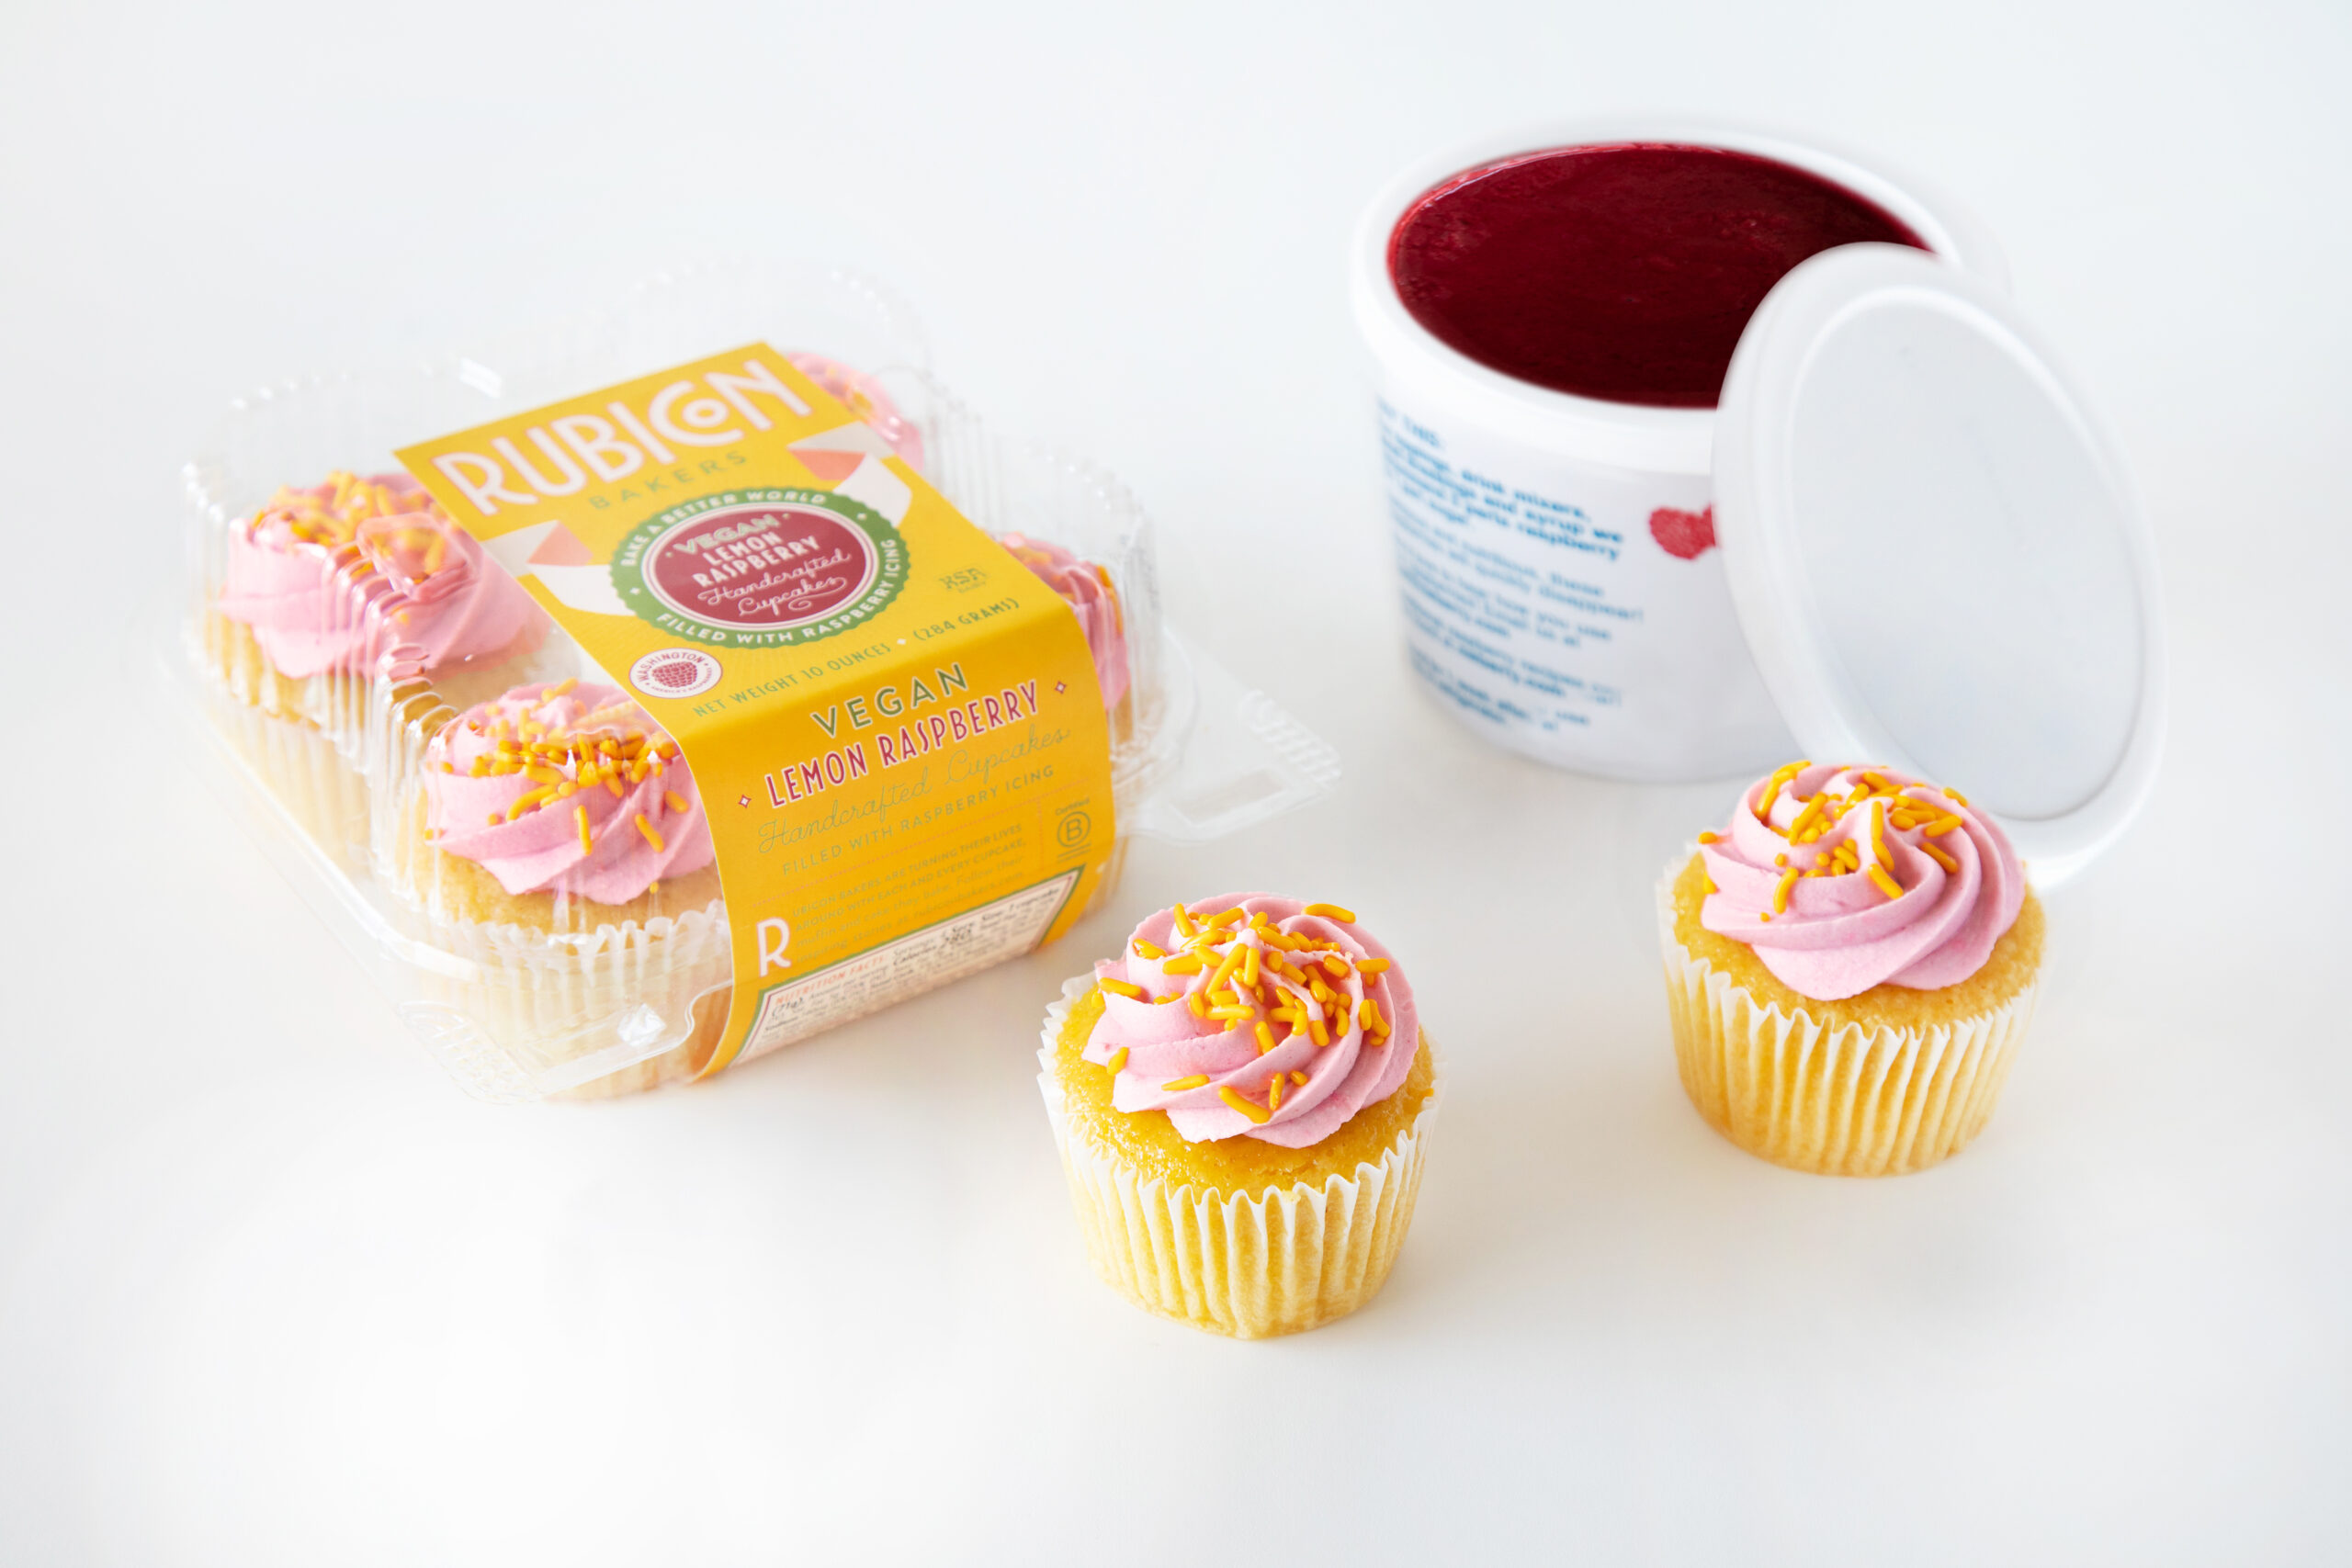 packaged Rubicon lemon raspberry cupcakes